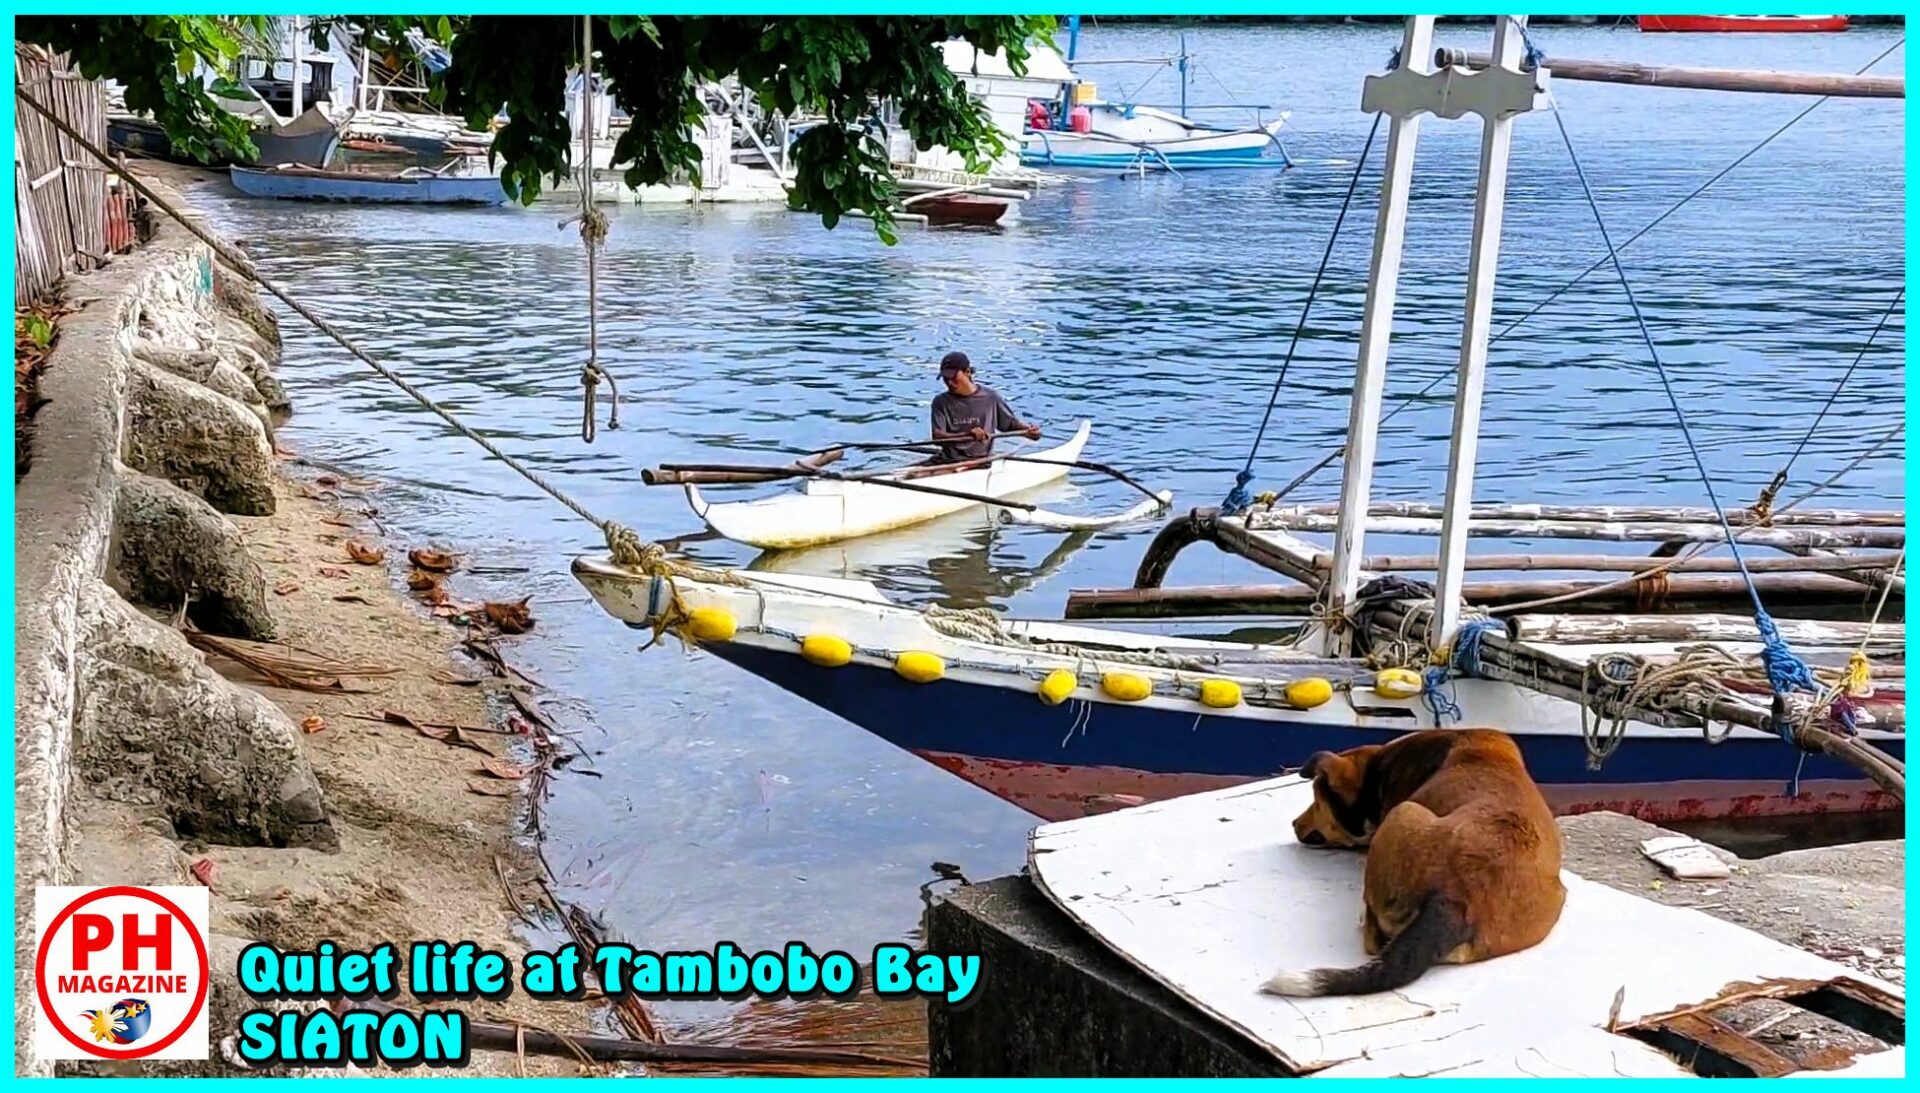 The quiet life at Tambobo Bay in Siaton